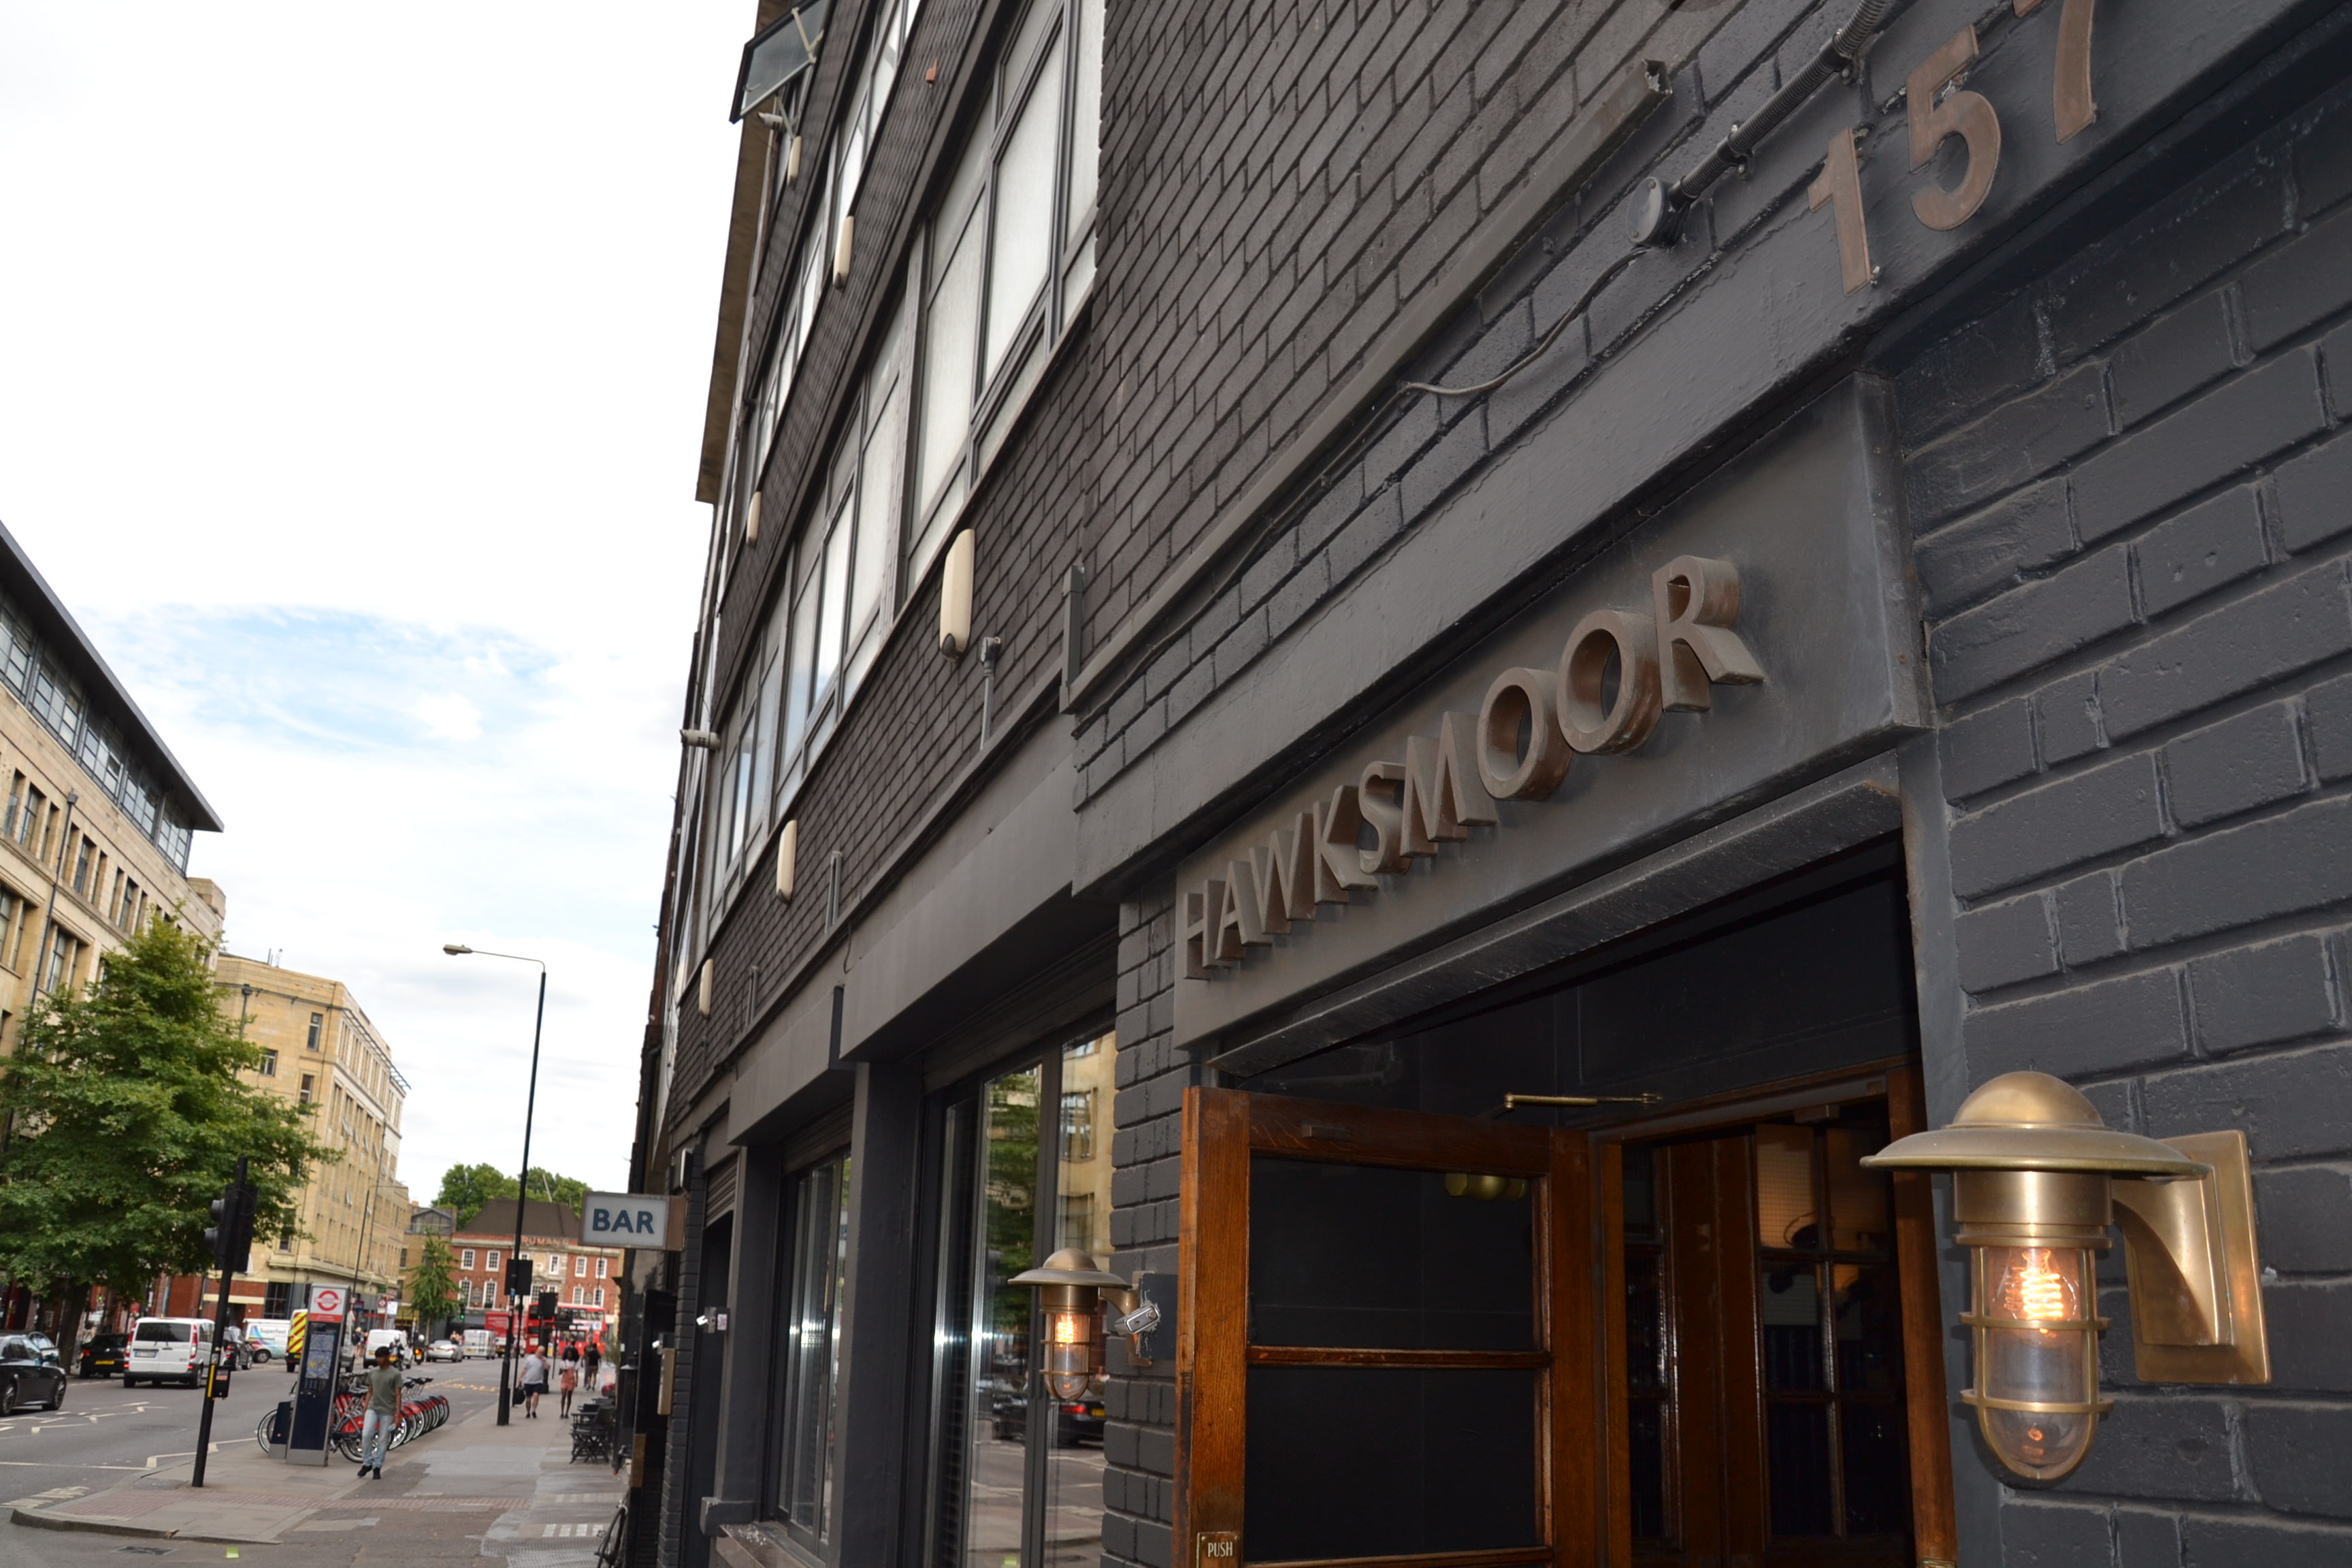 Hawksmoor Spitalfields | London, England Restaurants - Lonely Planet